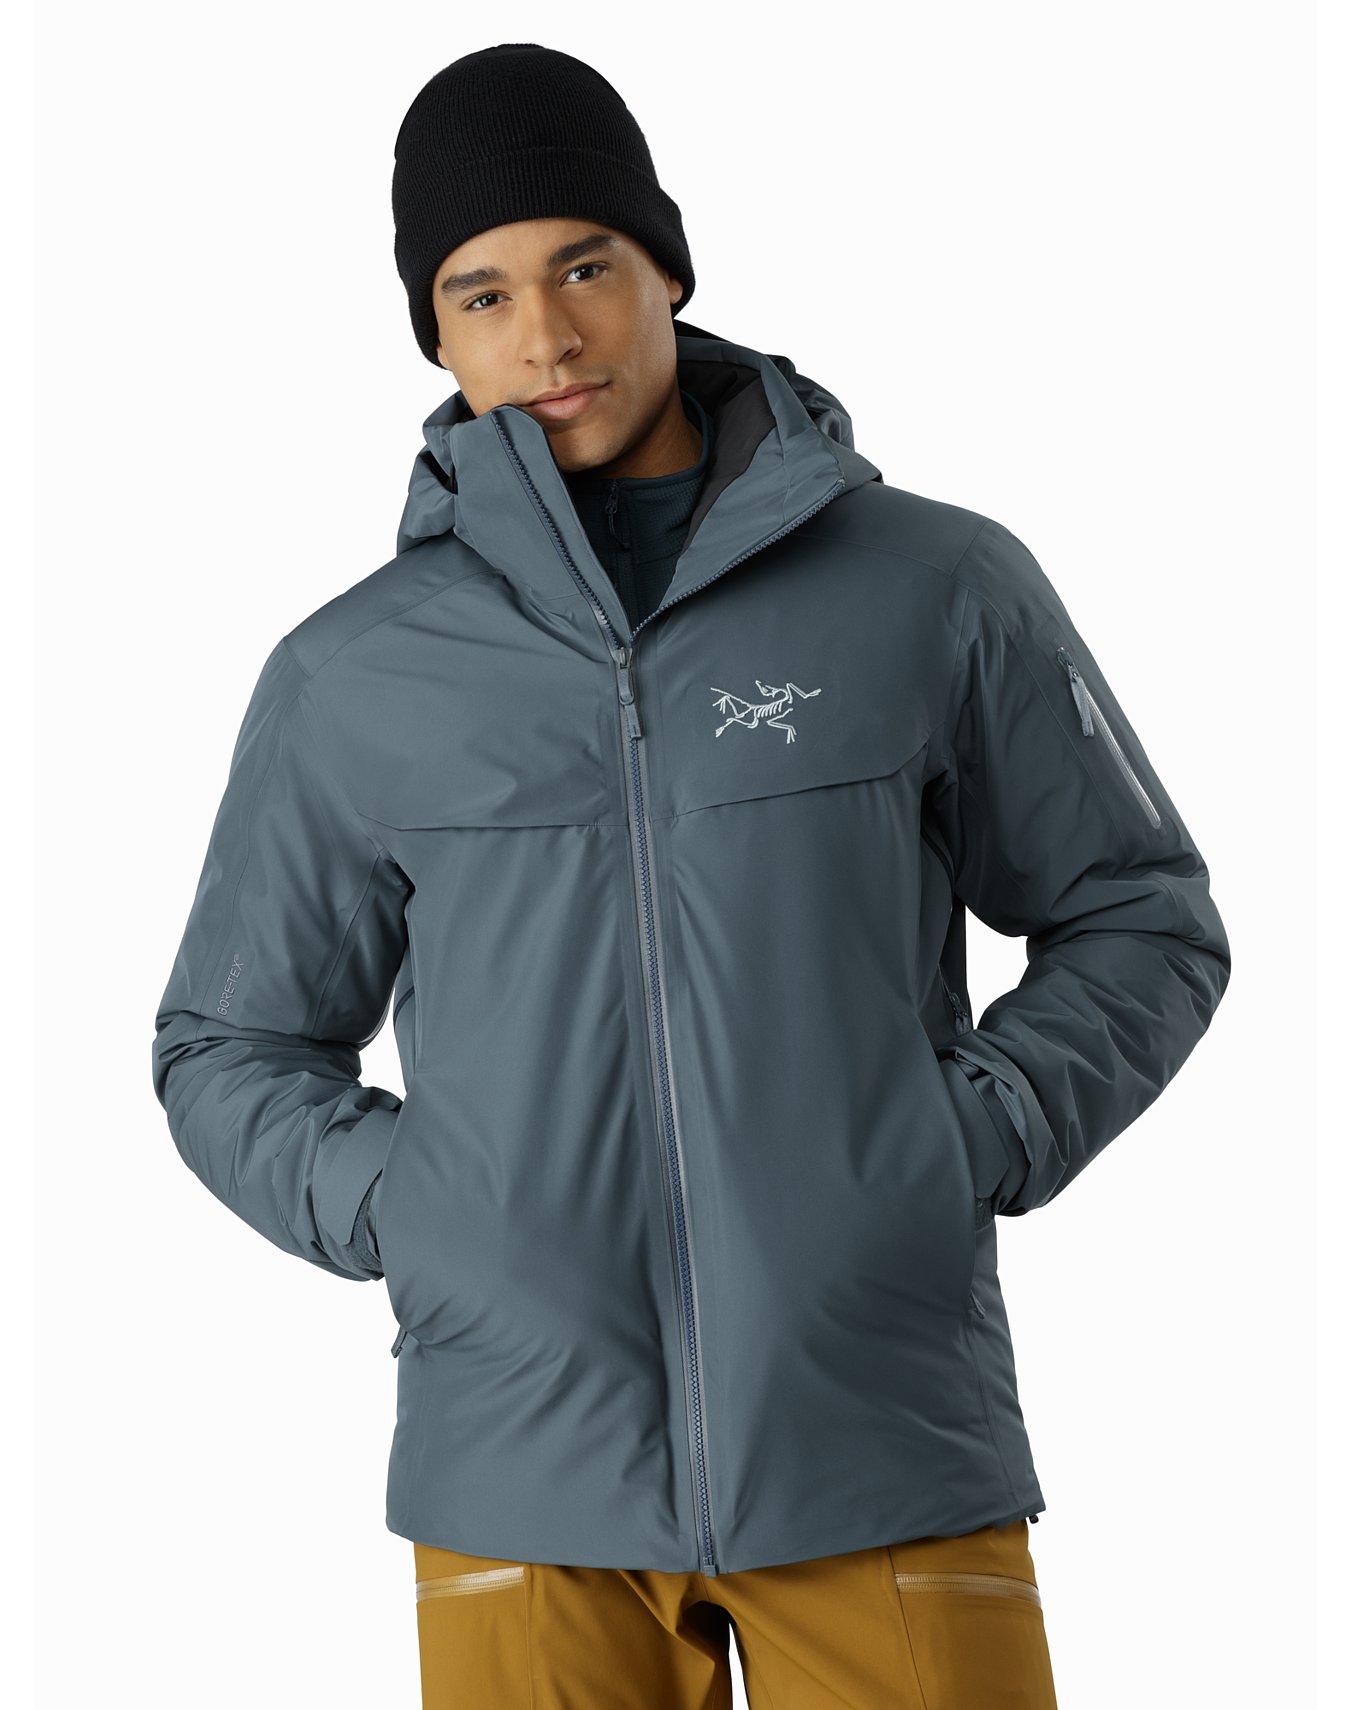 Arc'teryx Macai Jacket, men's, discontinued Fall 2019 colors (free